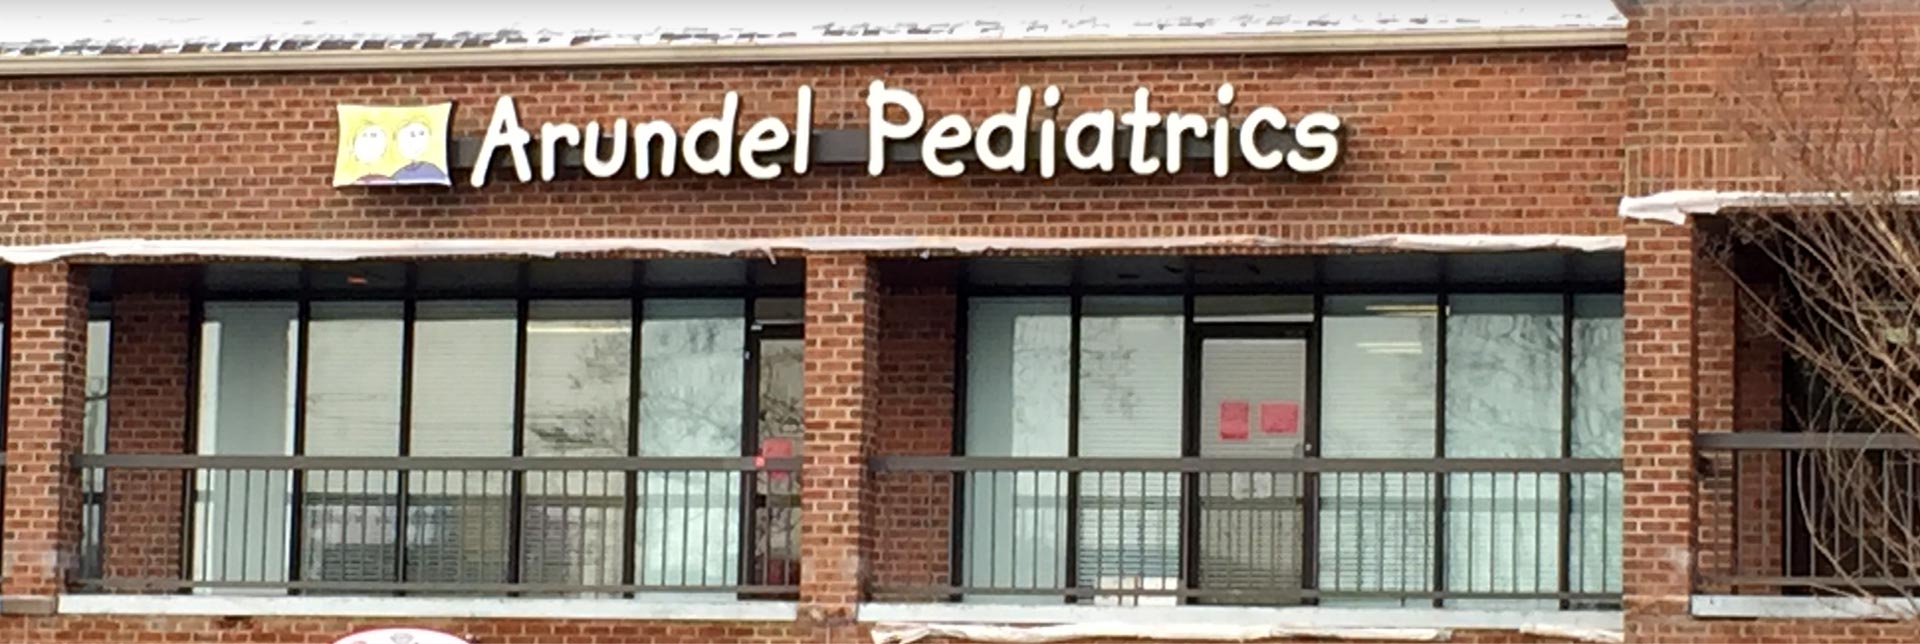 Personal Pediatric Care in Arnold & Anne Arundel County